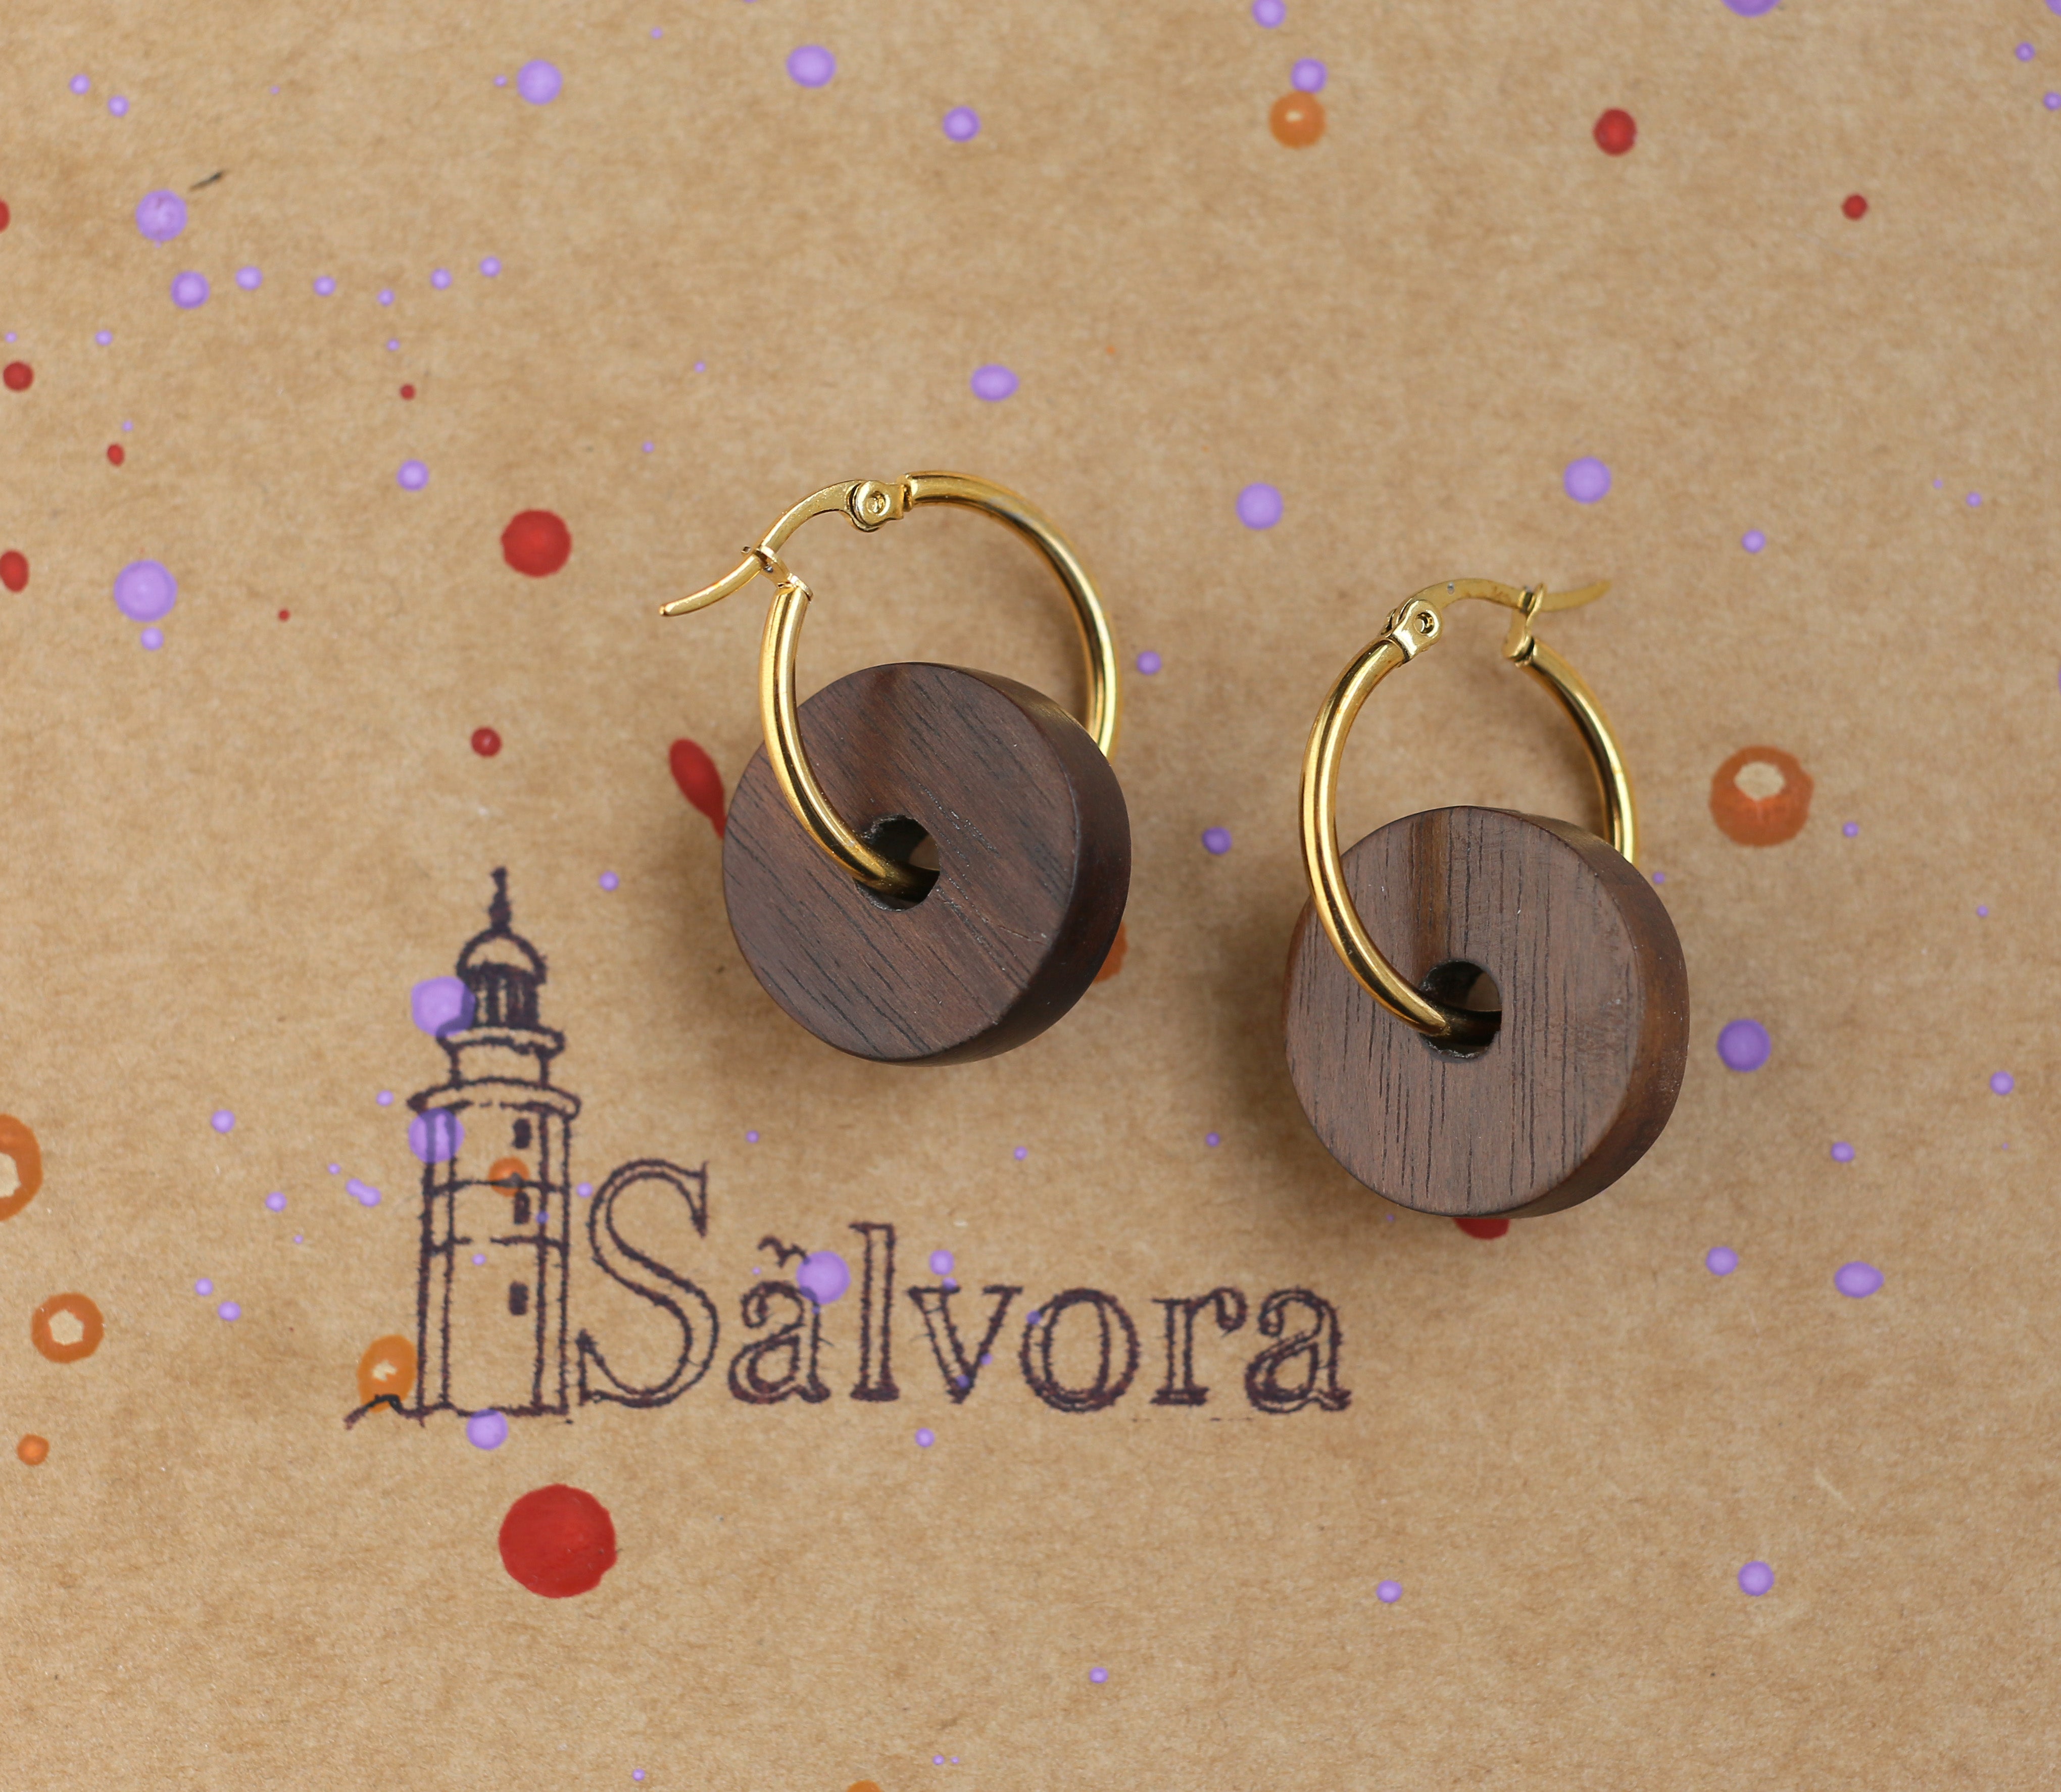 Exotic wood jewelry with ethnic stud earrings, Wood necklace set with wood earrings stud, Vintage wood earring  of mayan jewelry, Salvora